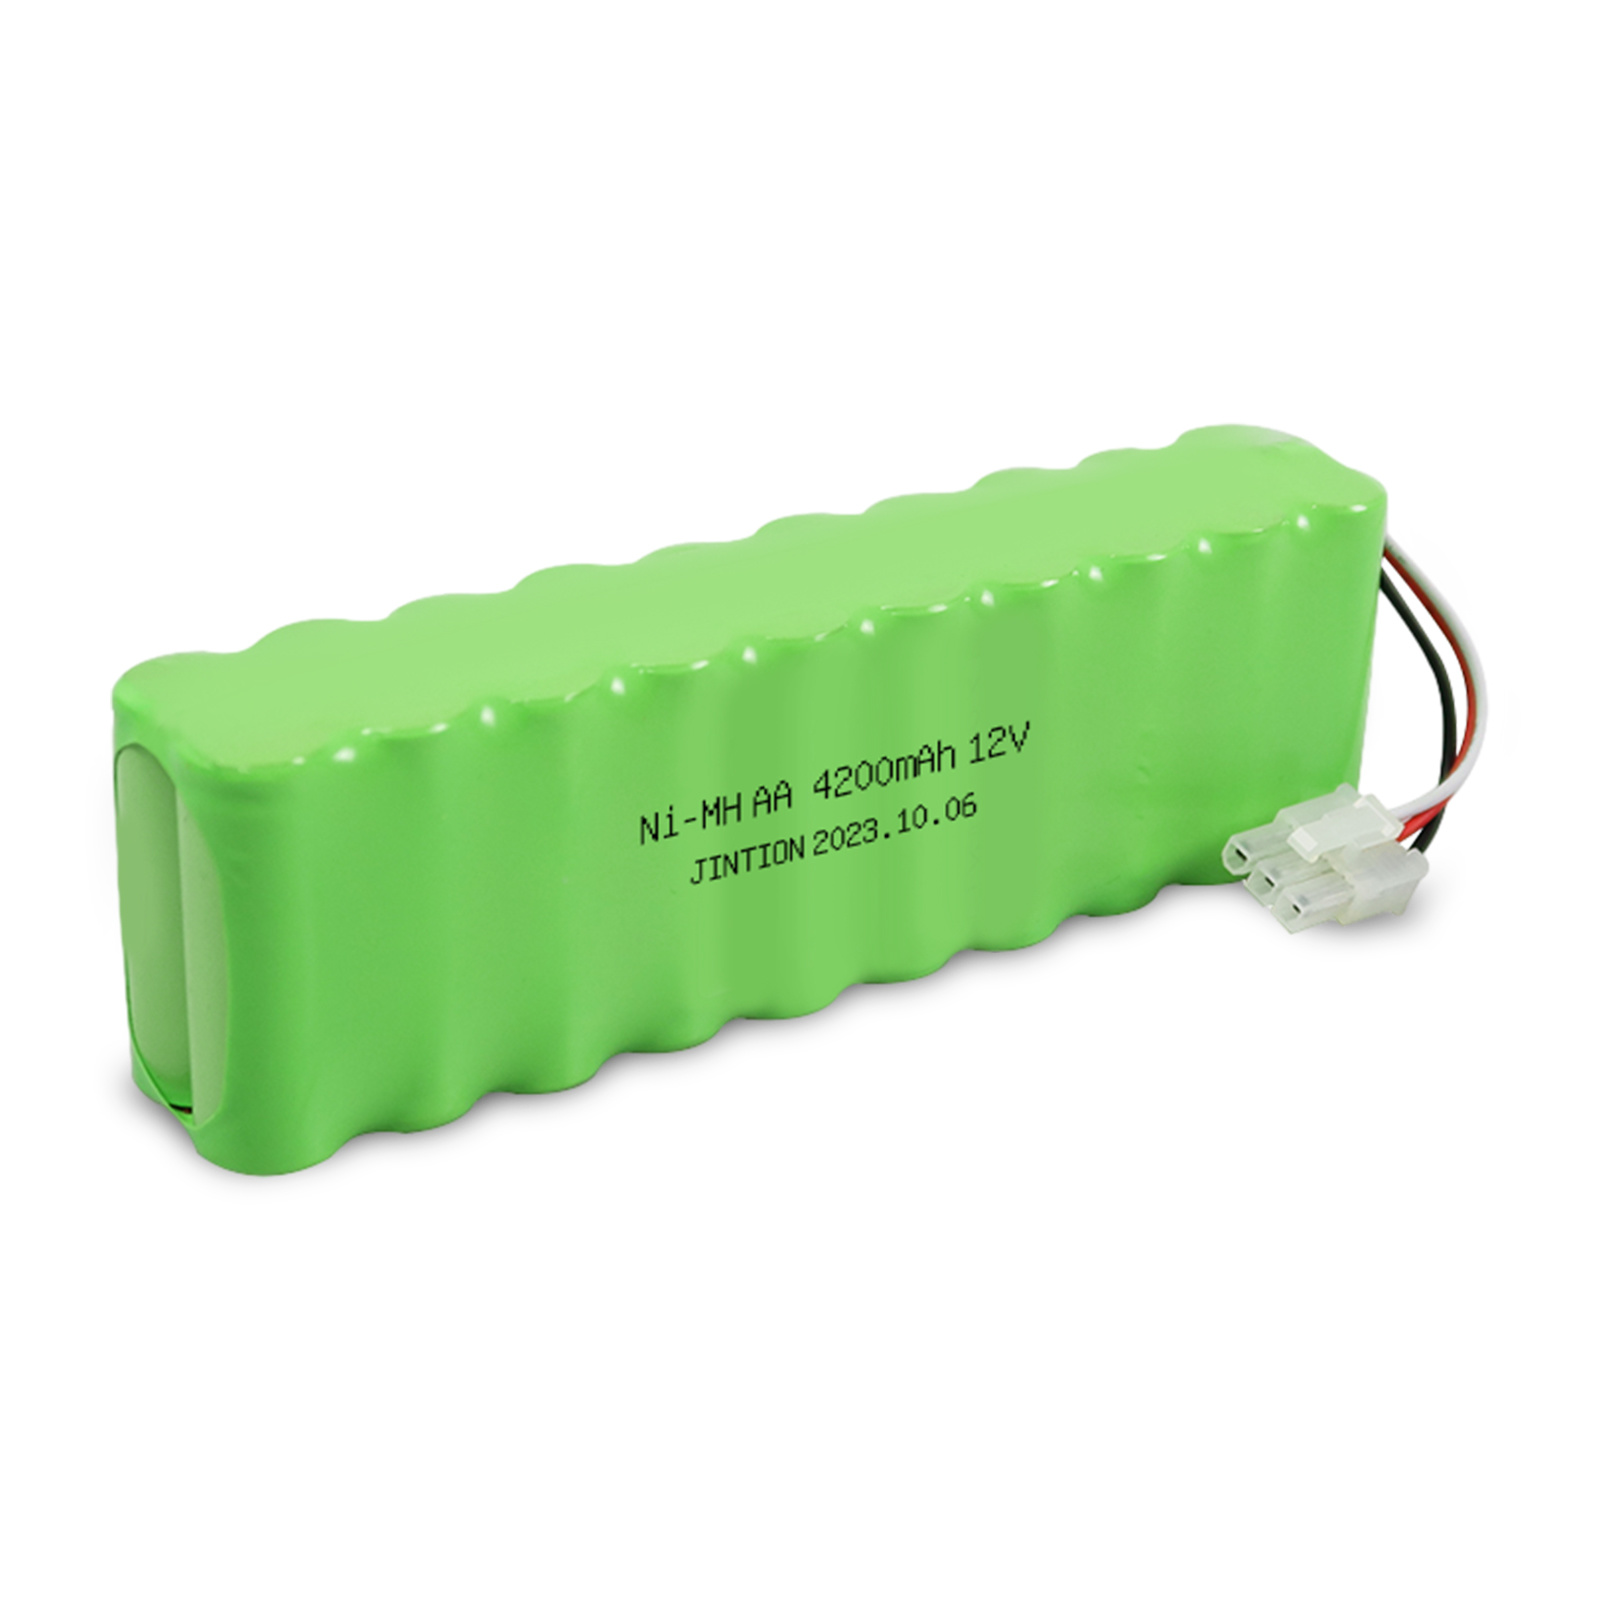 JINTION AA 4200mAh 12v nimh battery recharge battery pack batteries for Korea BIONET EKG3000 Medical ECG